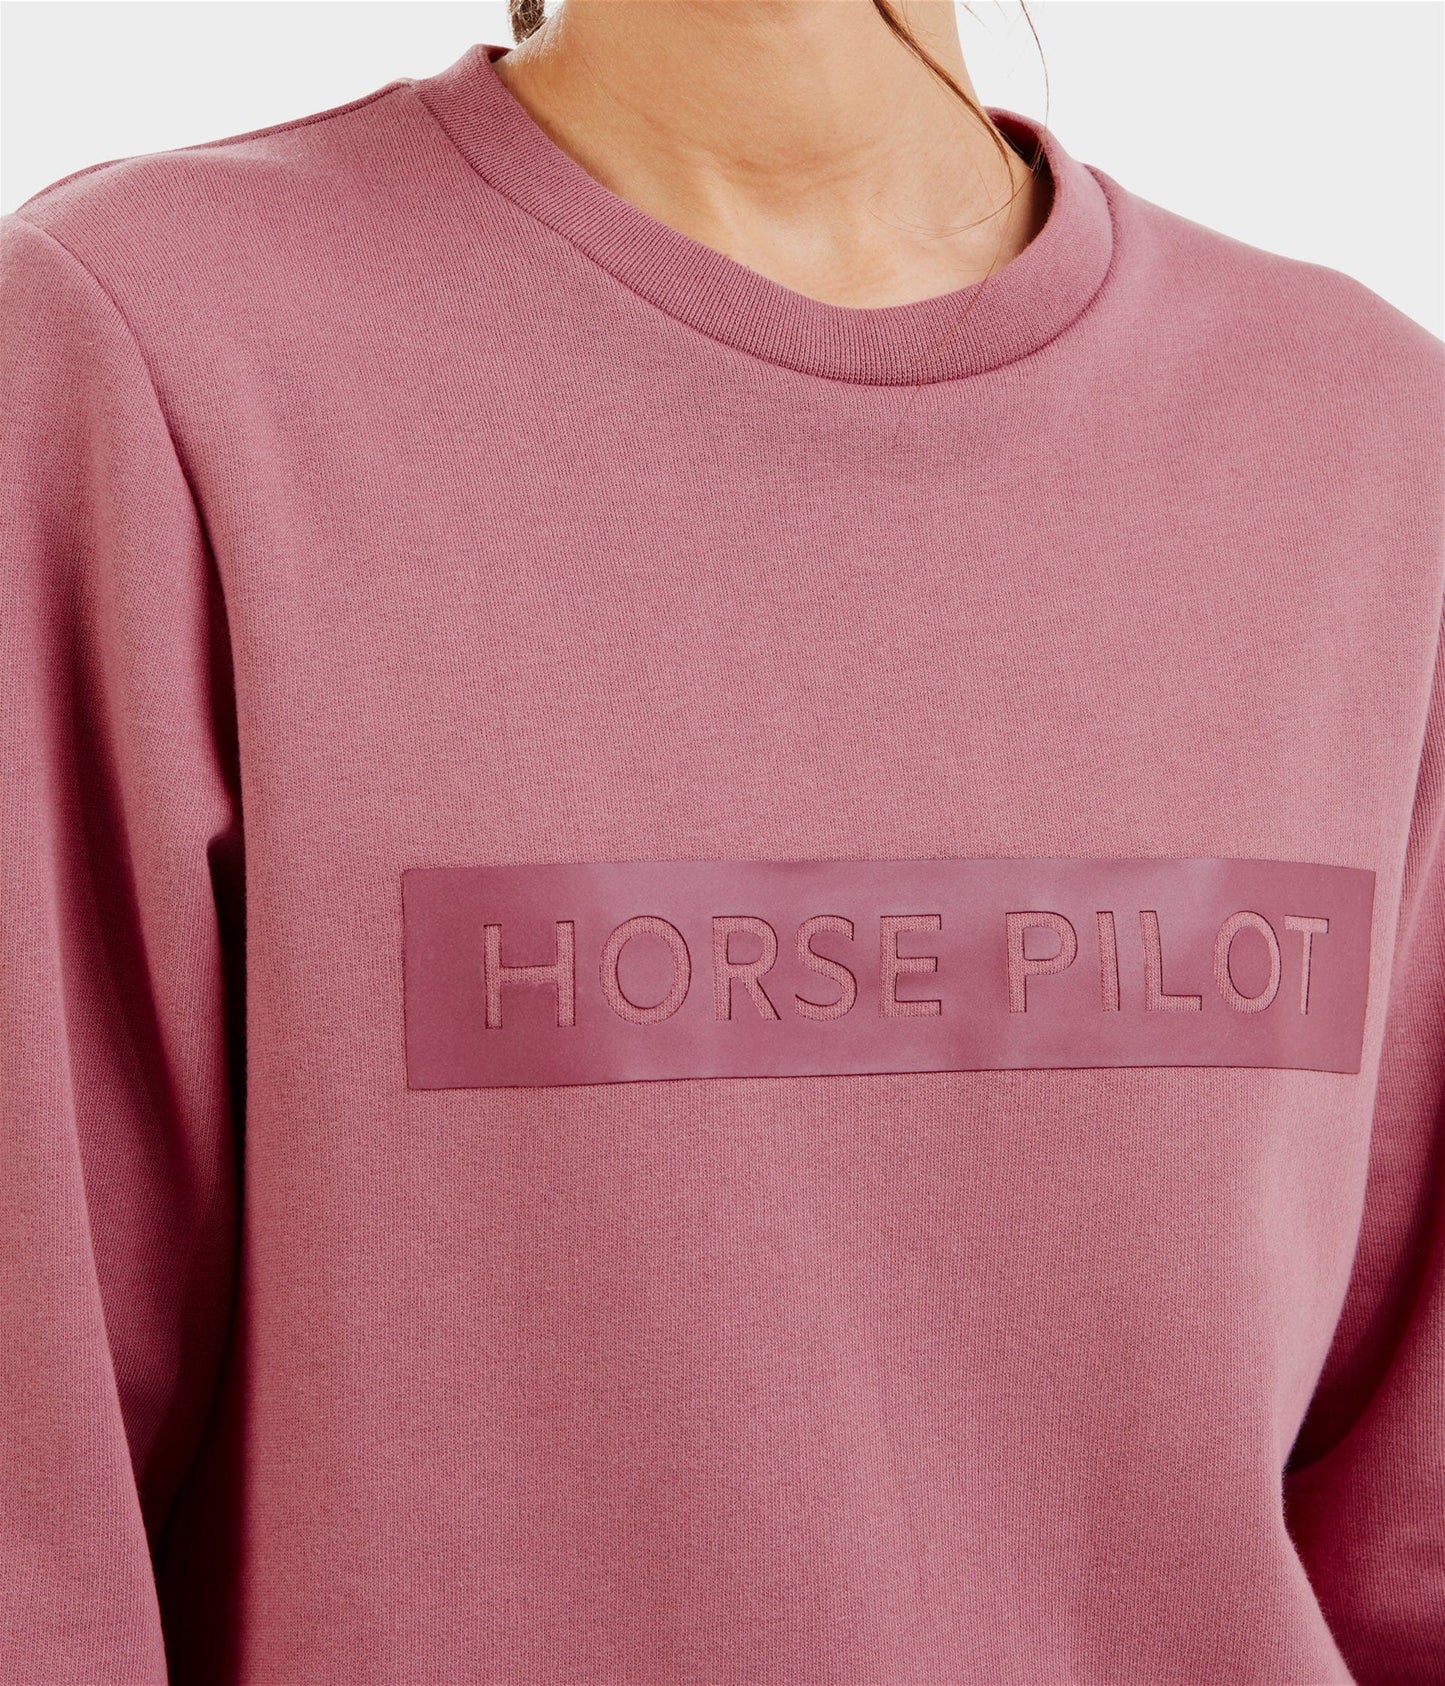 Horse Pilot Women's Team Sweatshirt - Mesa Pink